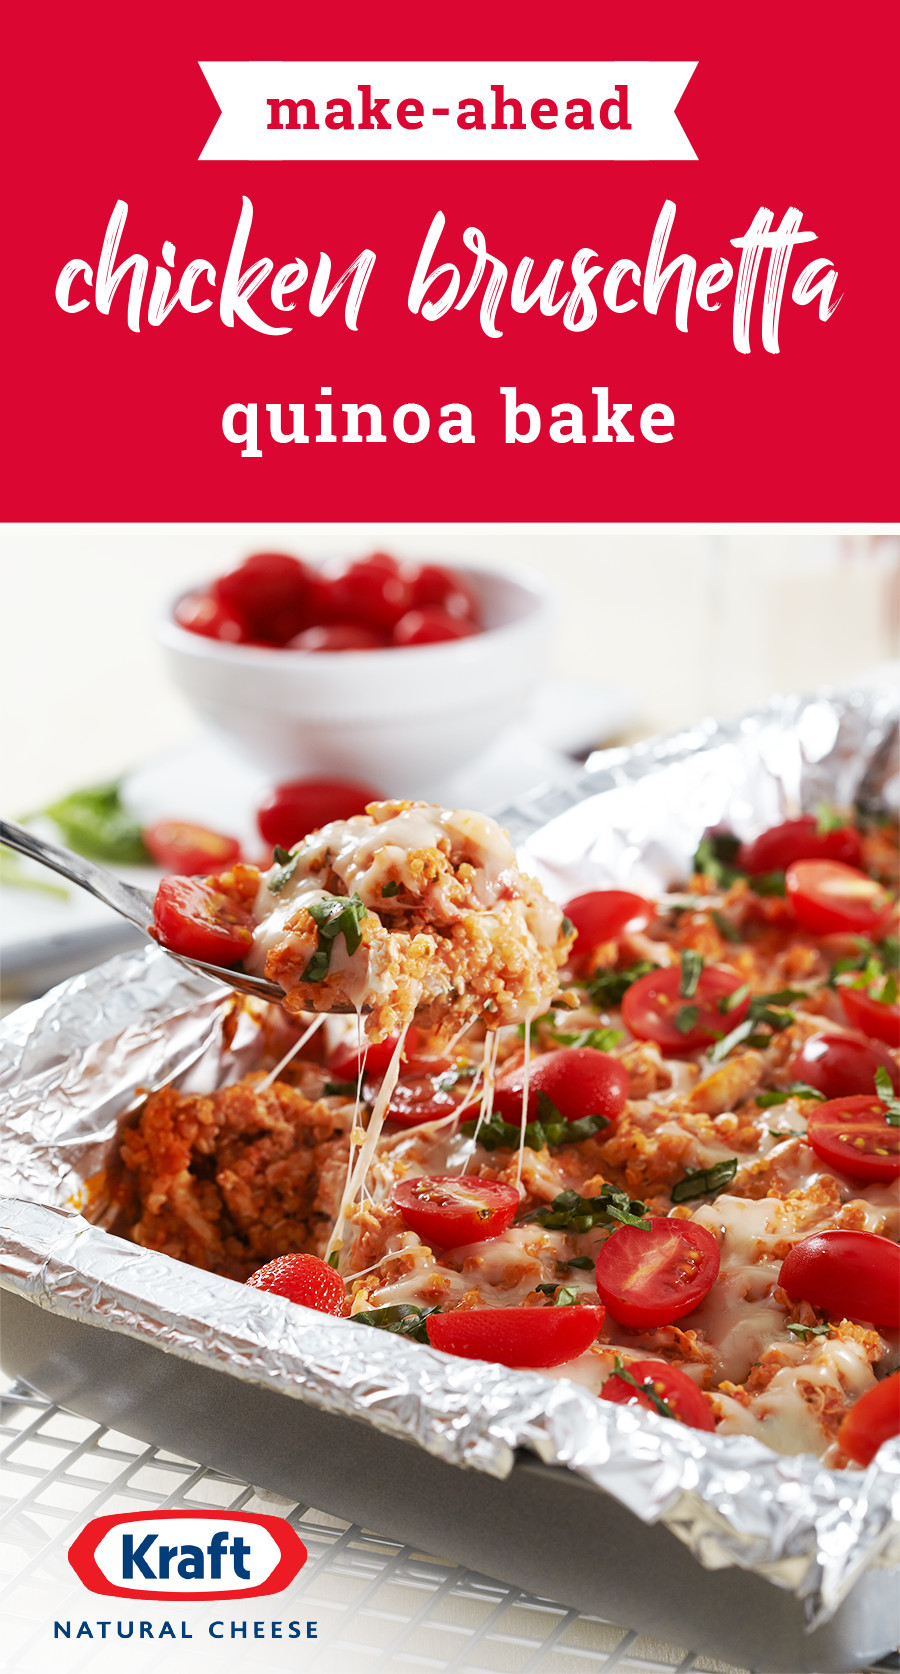 Make Ahead Bruschetta
 Make Ahead Chicken Bruschetta Quinoa Bake Recipe